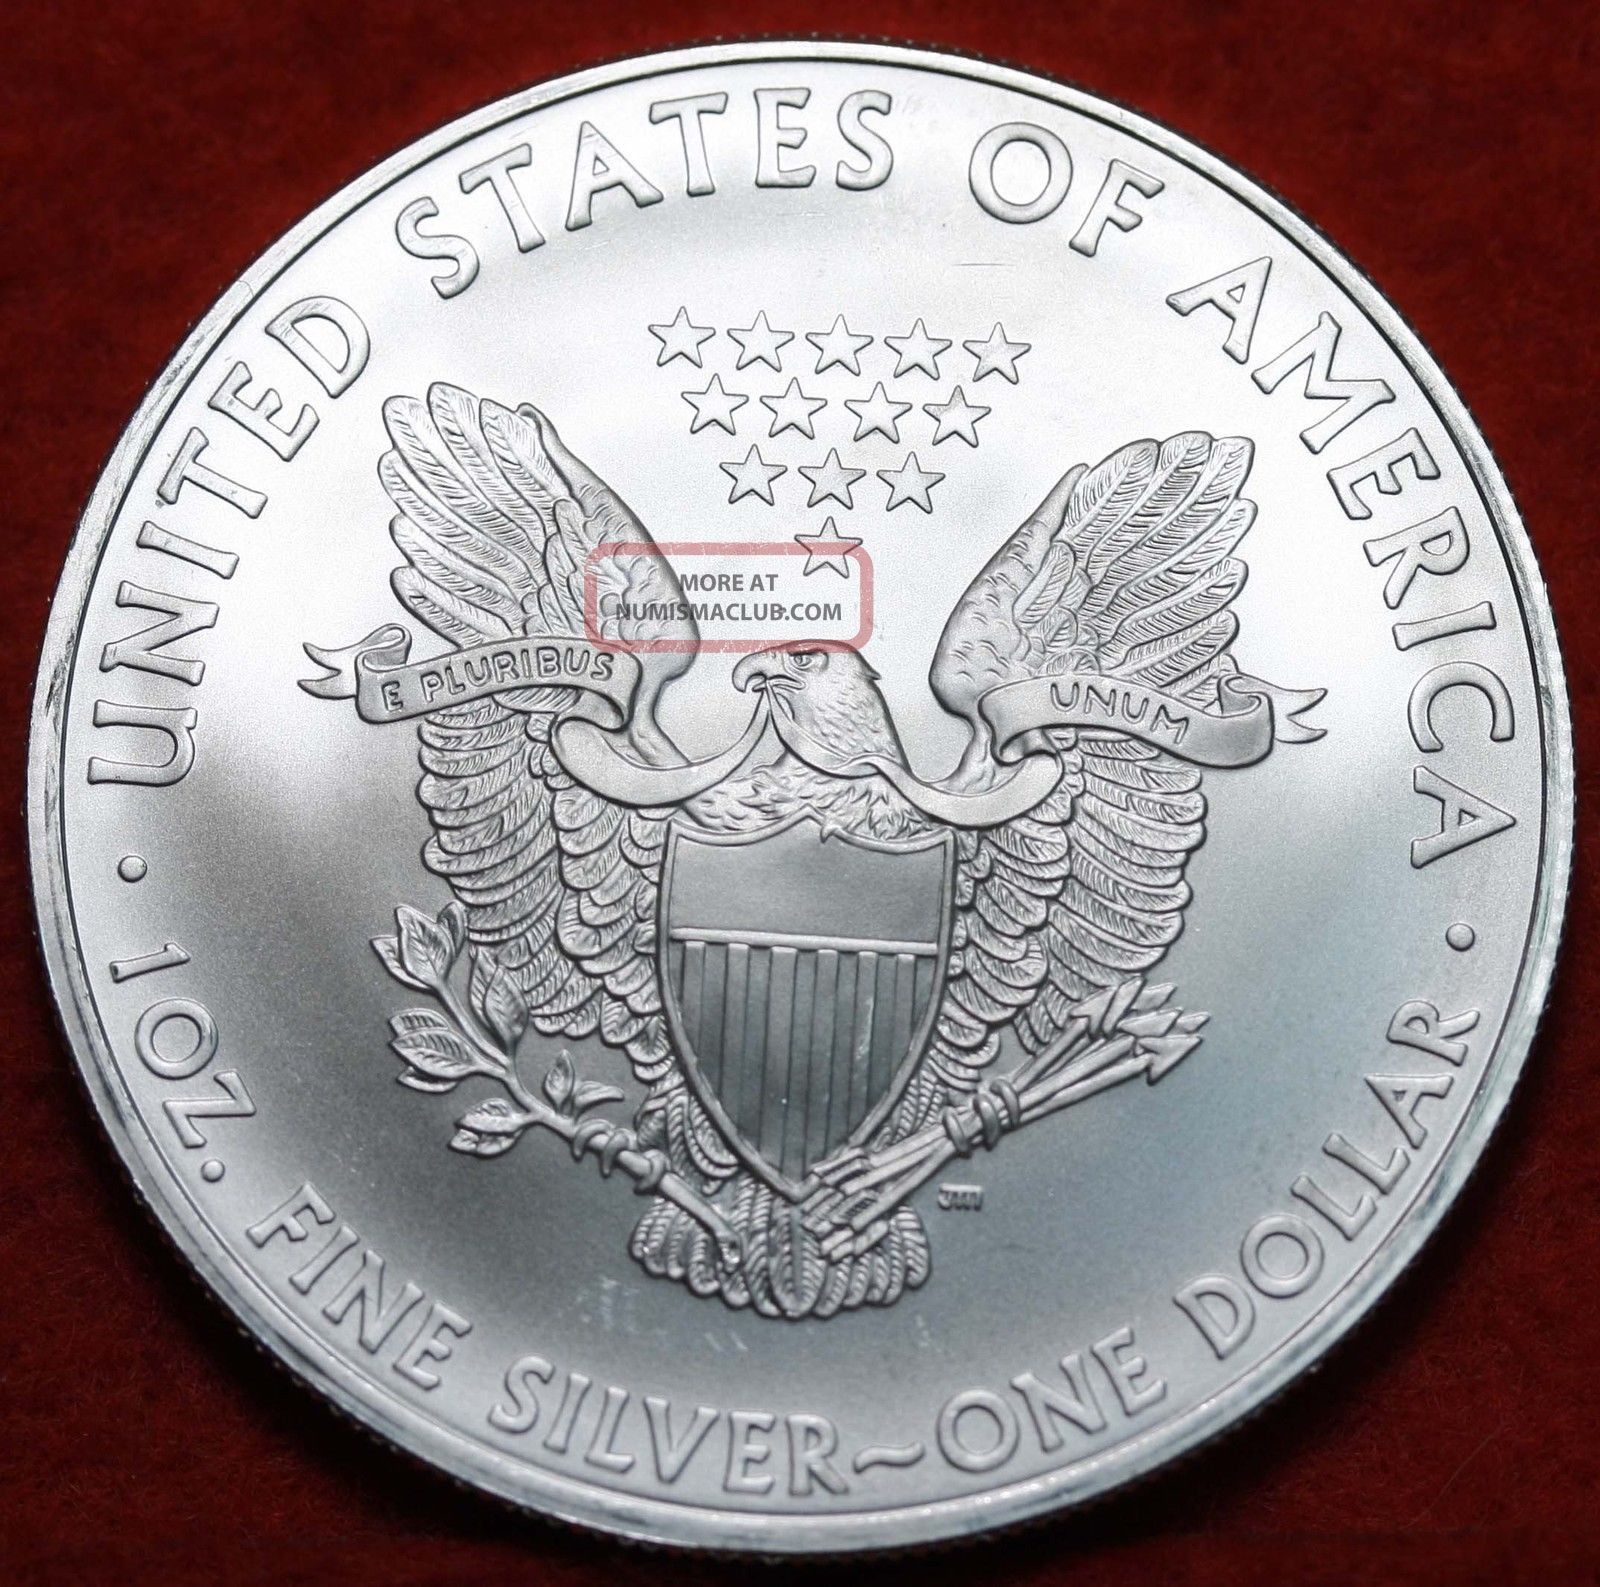 Uncirculated 2008 American Eagle Silver Dollar